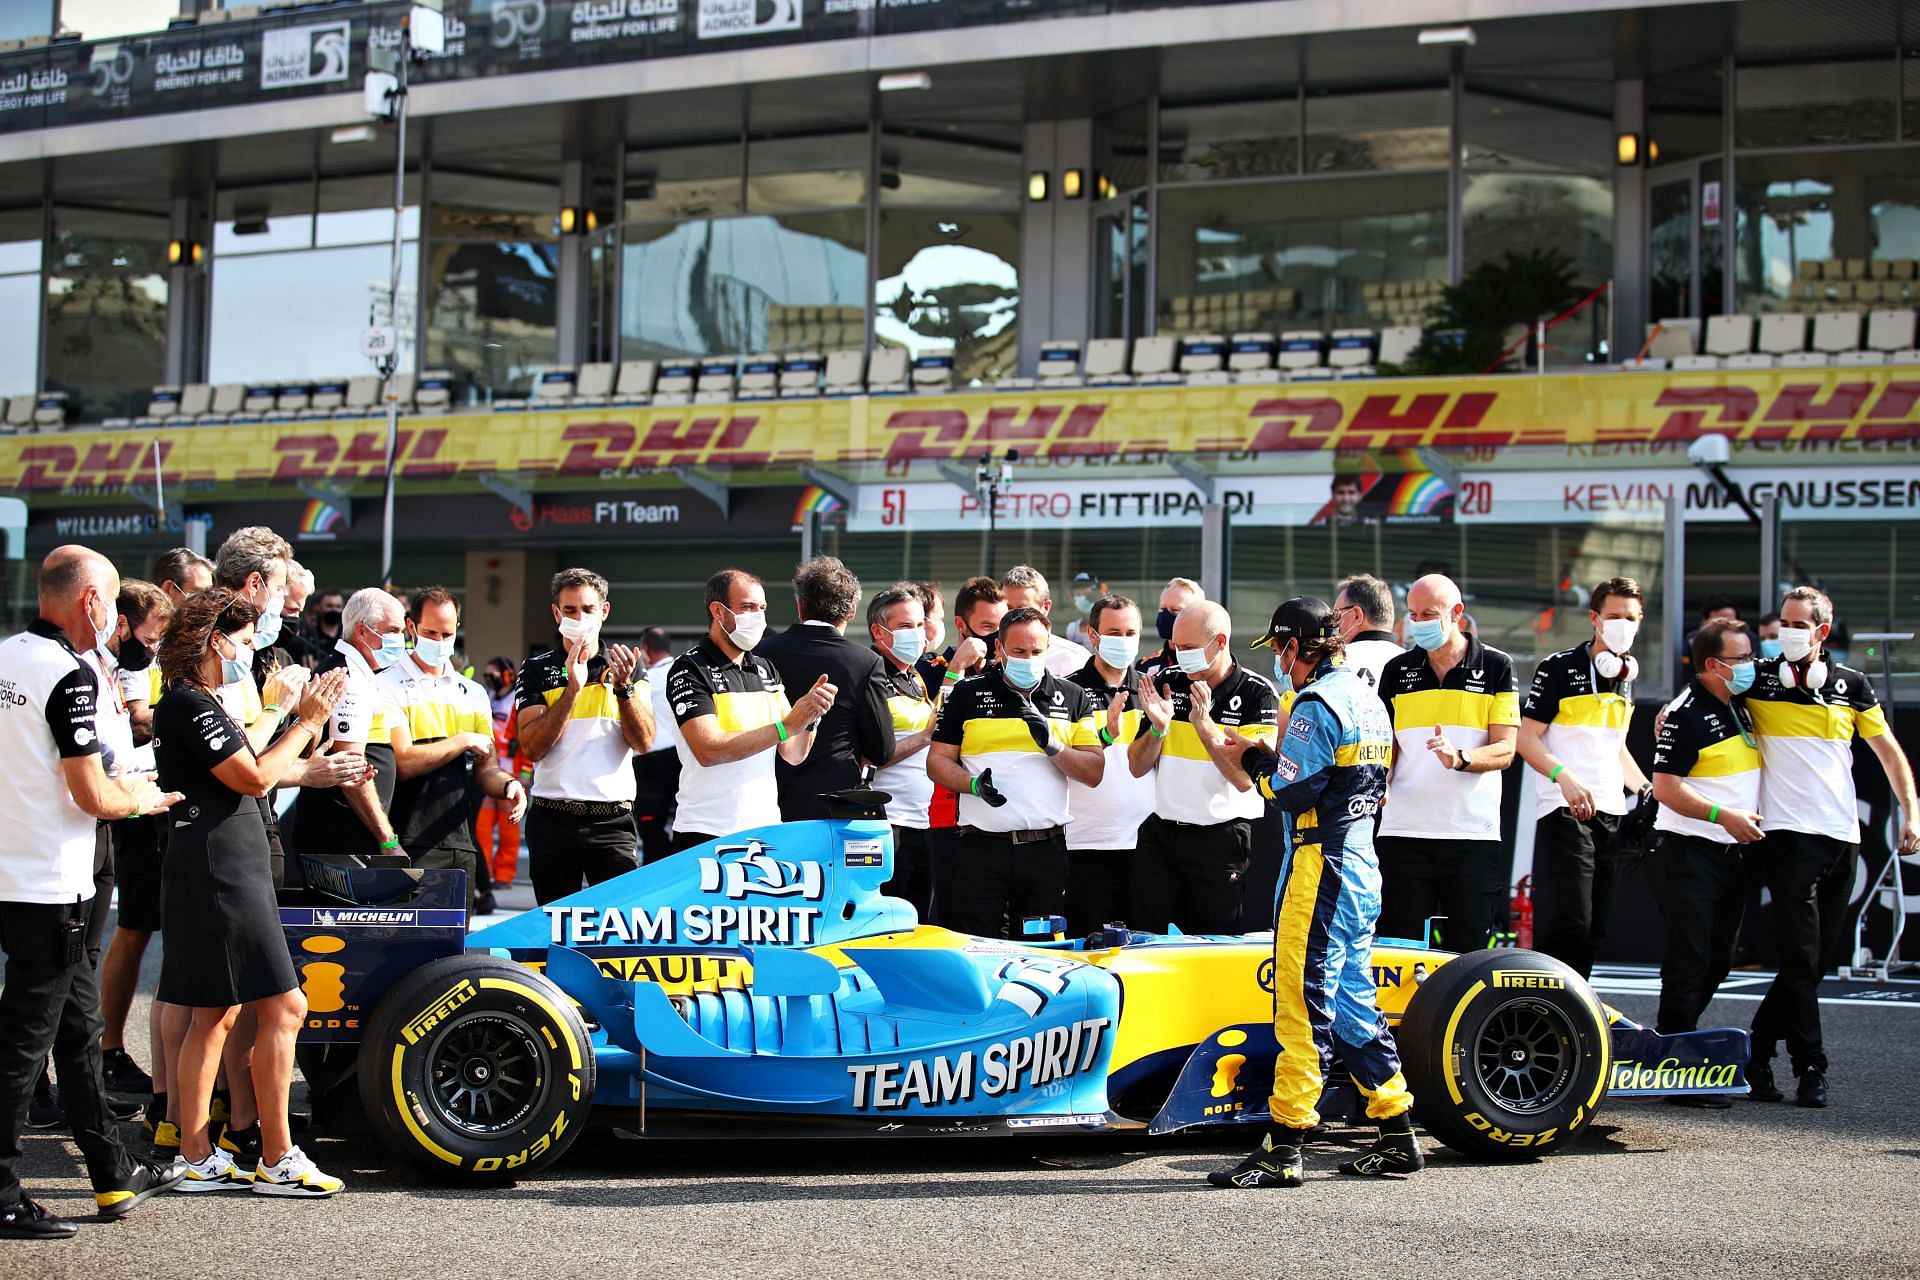 Fernando with his title-winning team